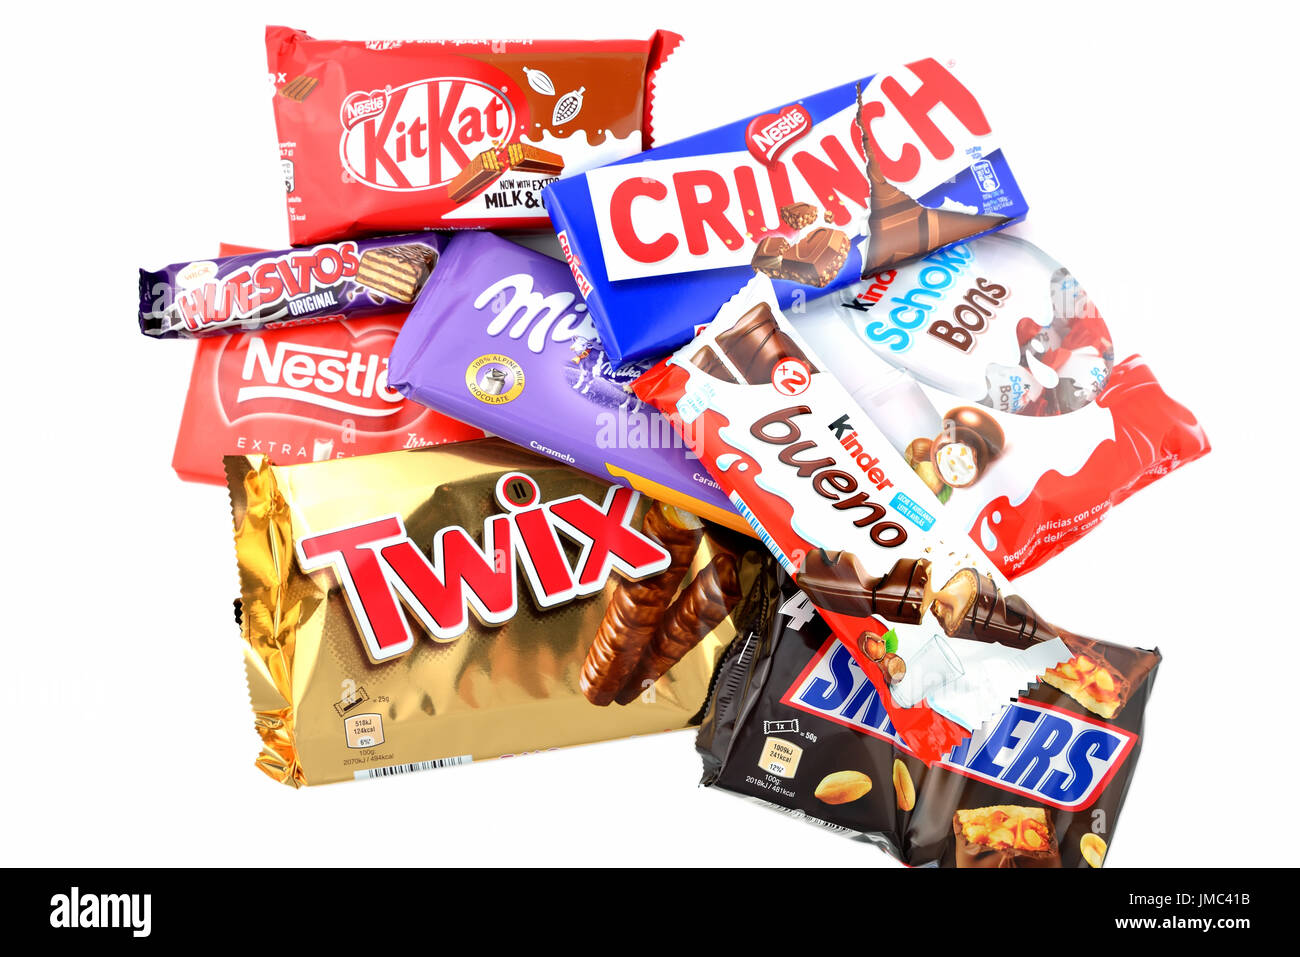 https://c8.alamy.com/comp/JMC41B/a-bunch-of-chocolate-bars-including-snickers-twix-crunch-milka-kit-JMC41B.jpg